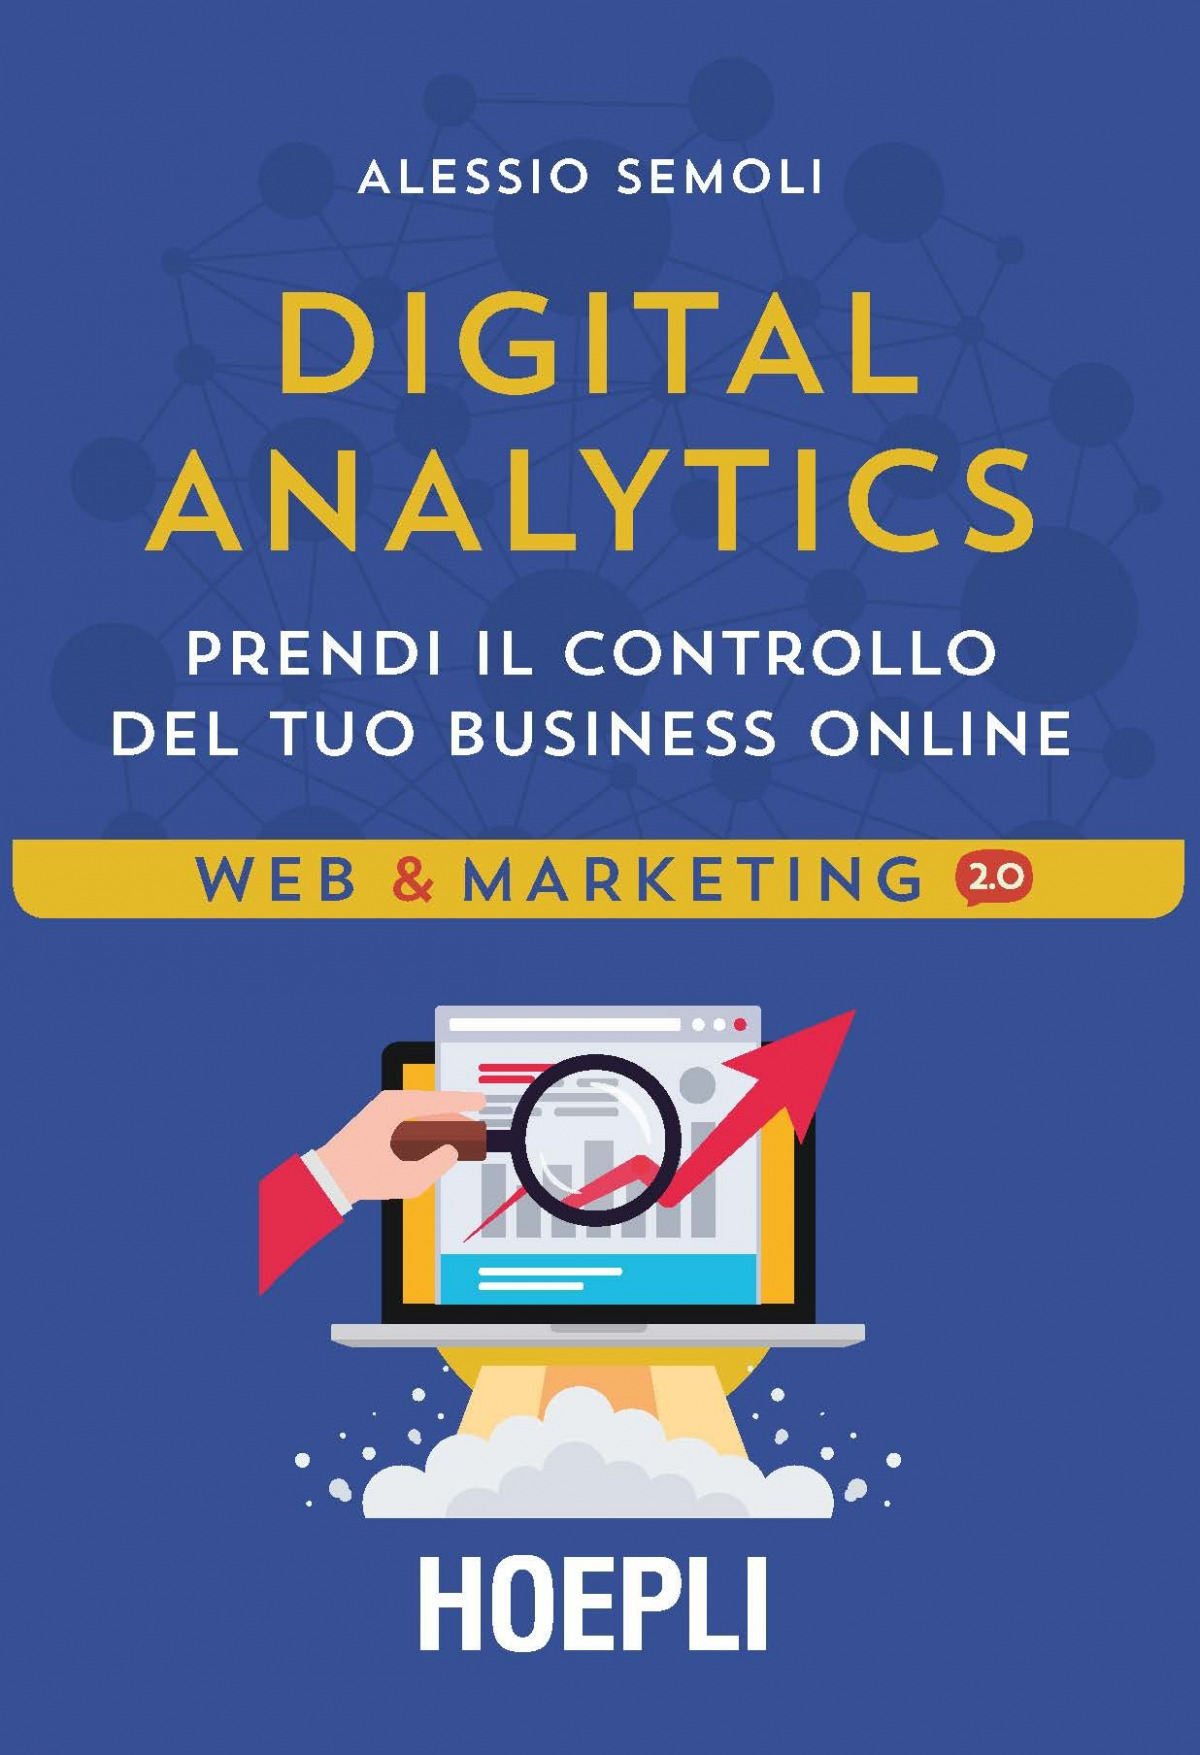 Digital Analytics - Alessio, Semoli